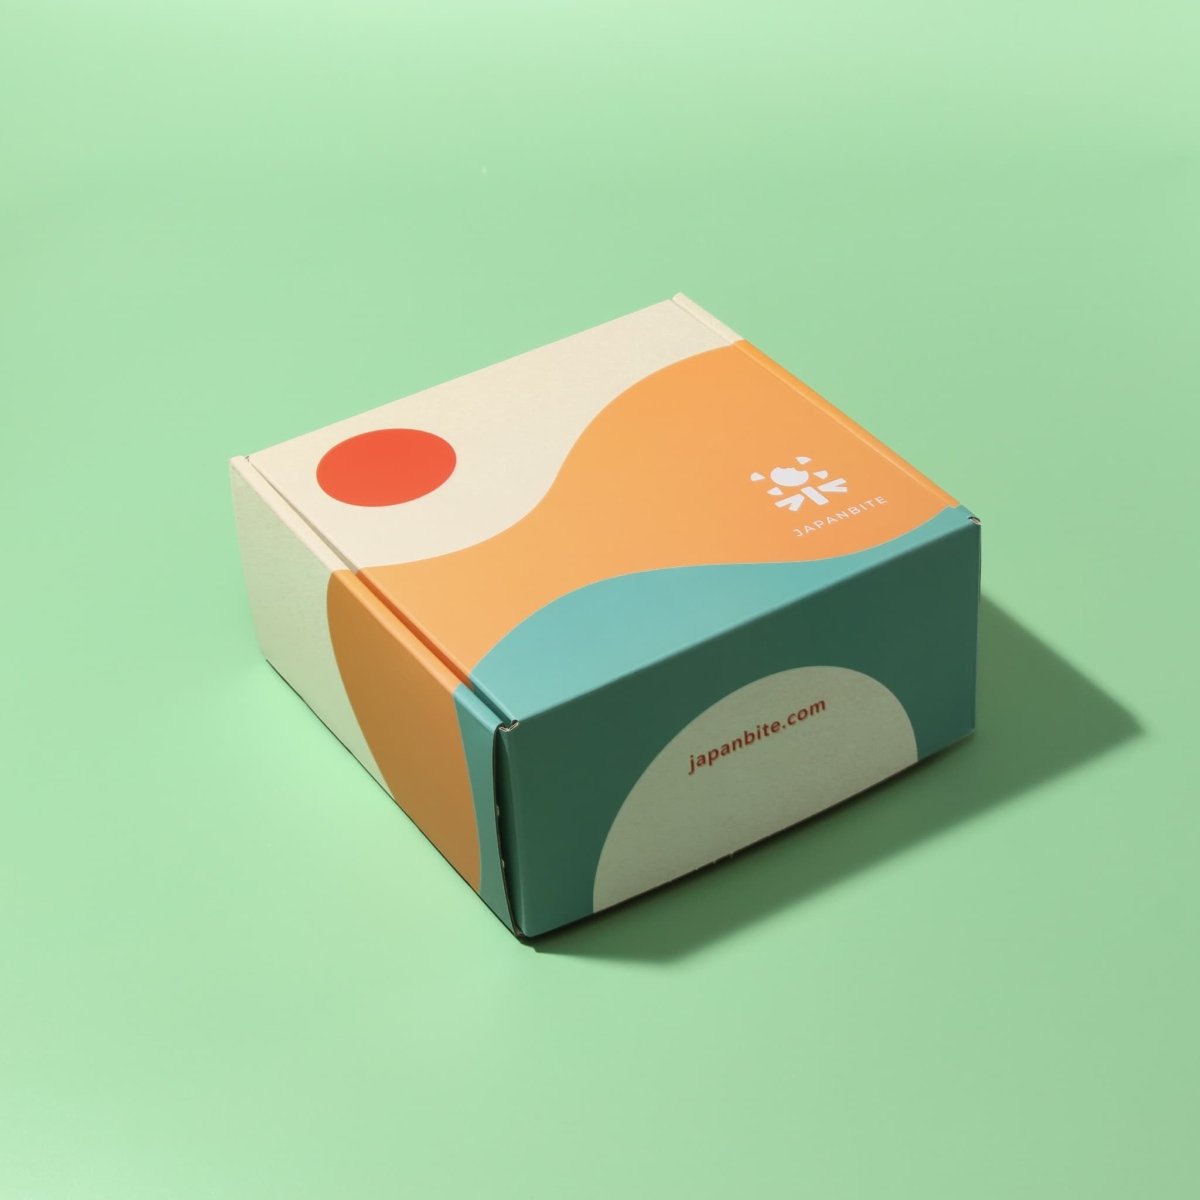 JAPANBITE Premium Vegetarian Snack Box